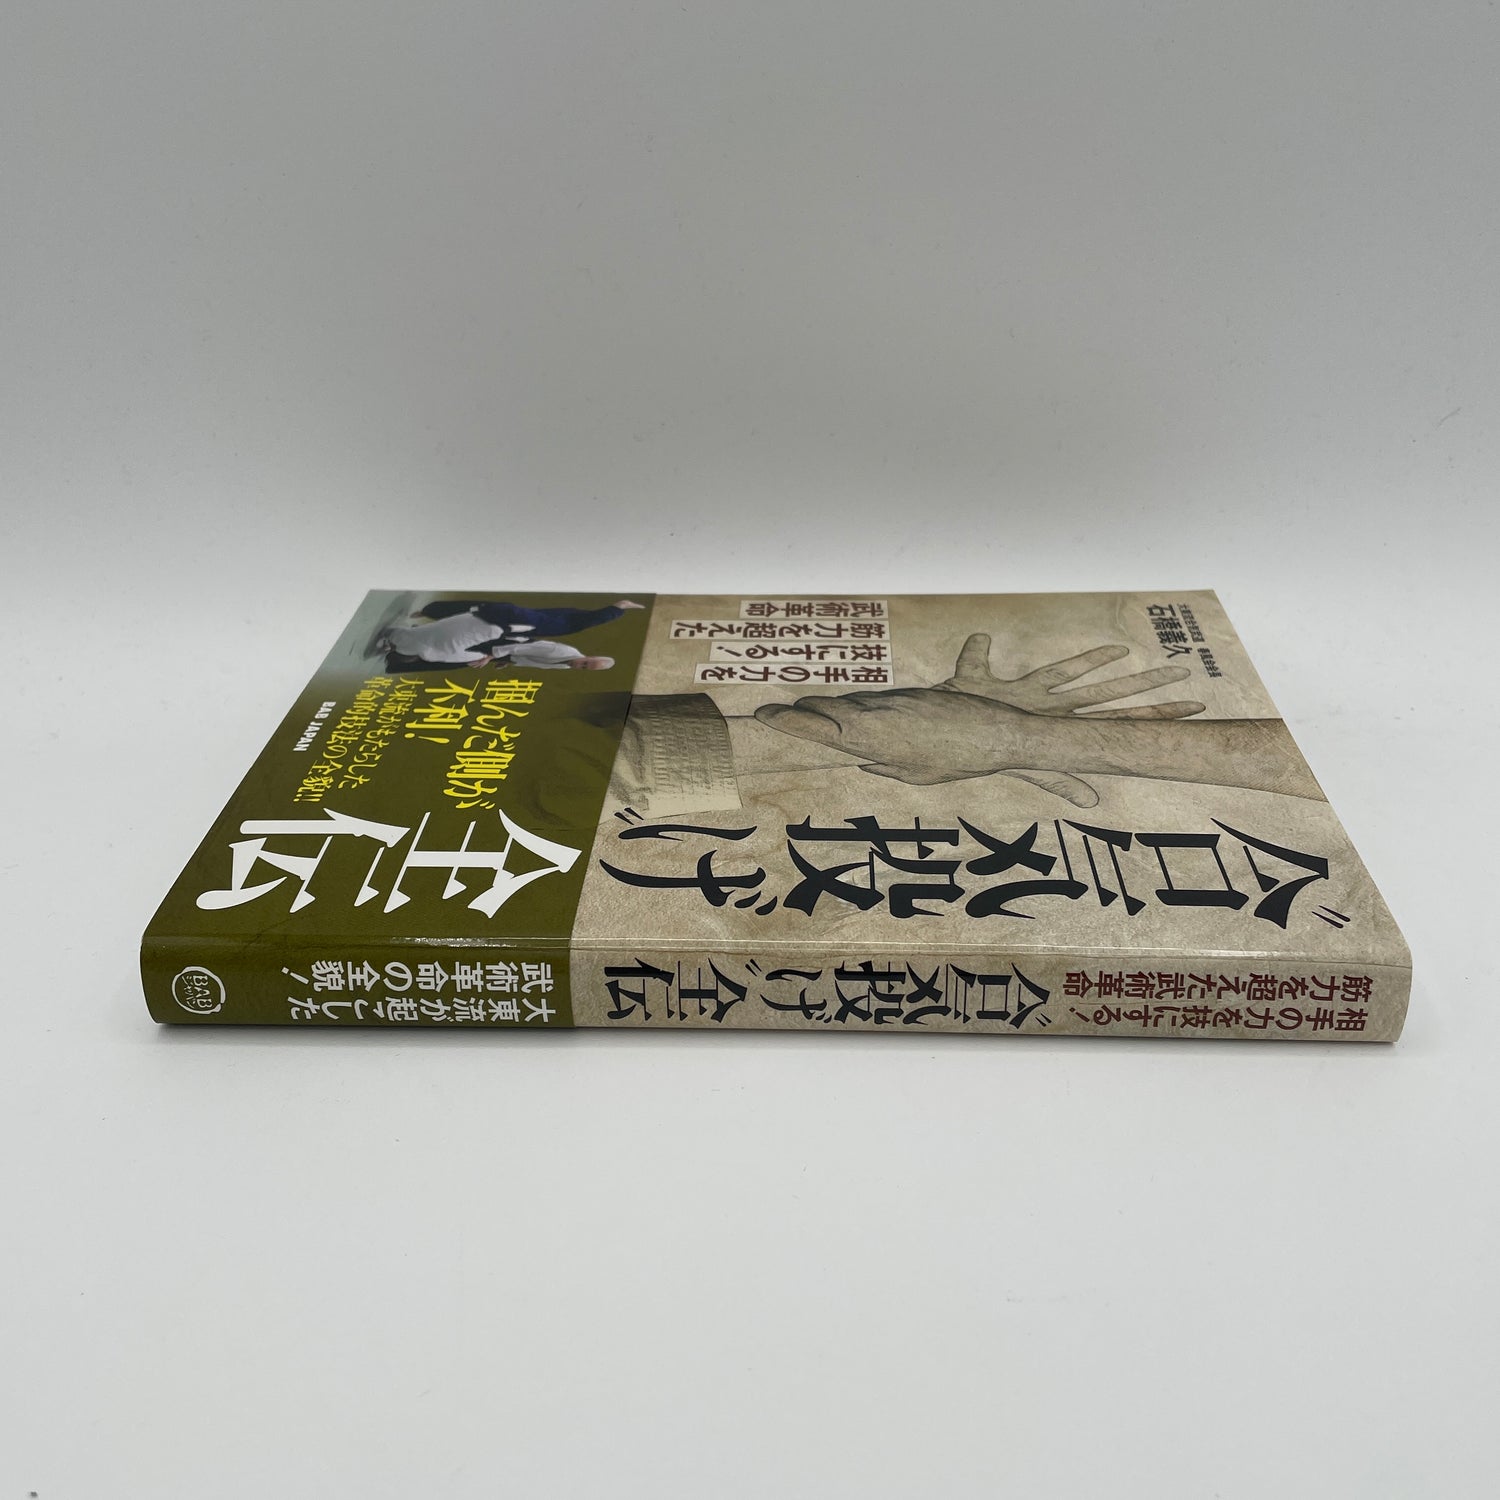 Complete Compendium of Aiki Throws Book by Yoshihisa Ishibashi